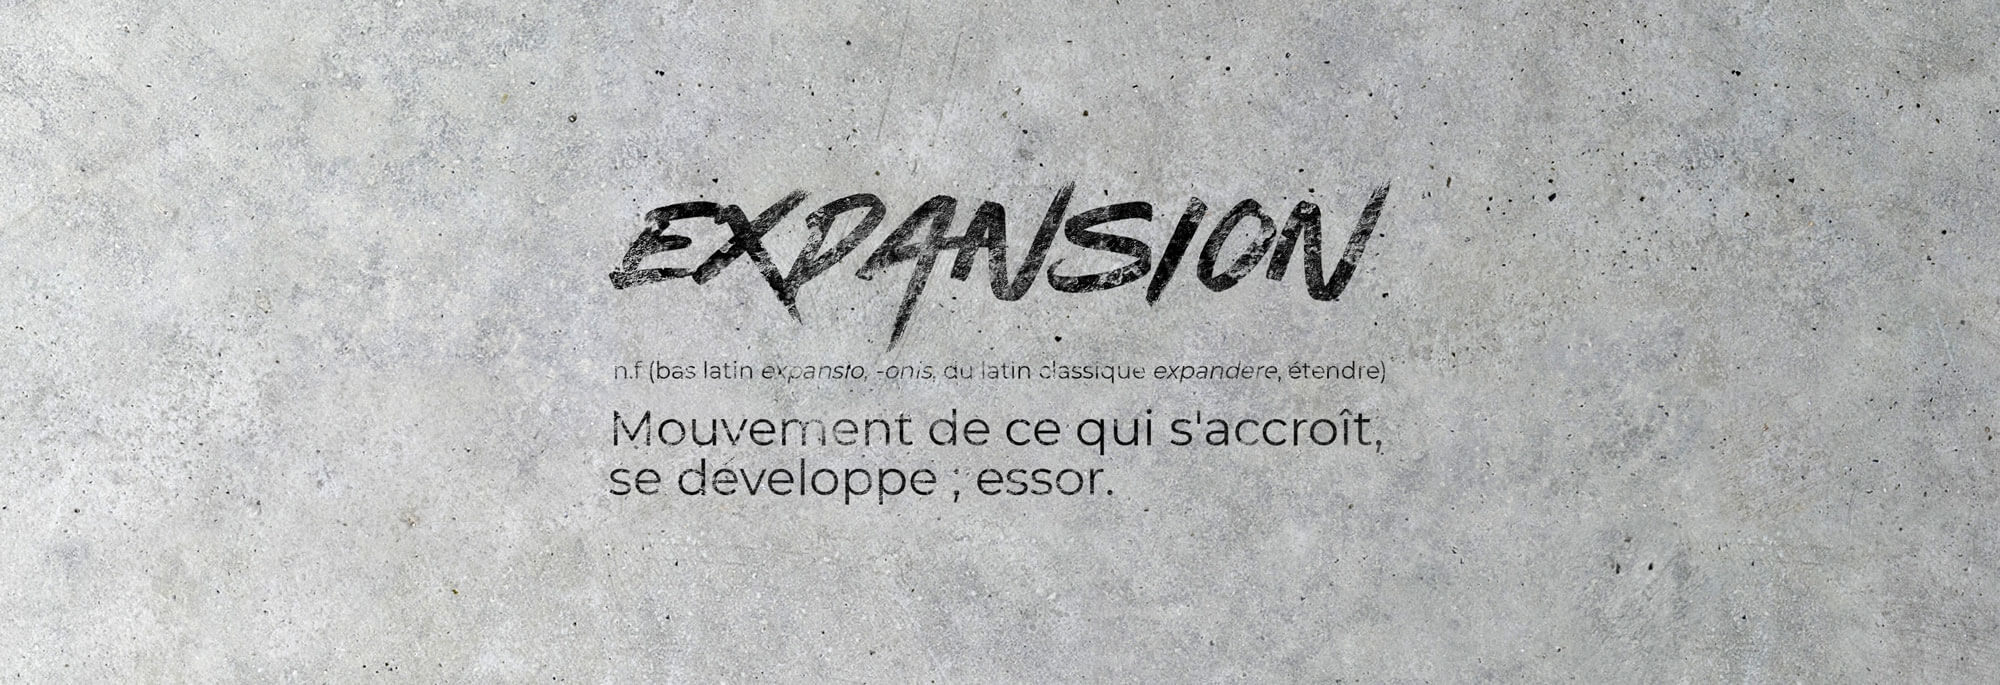 expansion-dirigeantes-nxt-concept